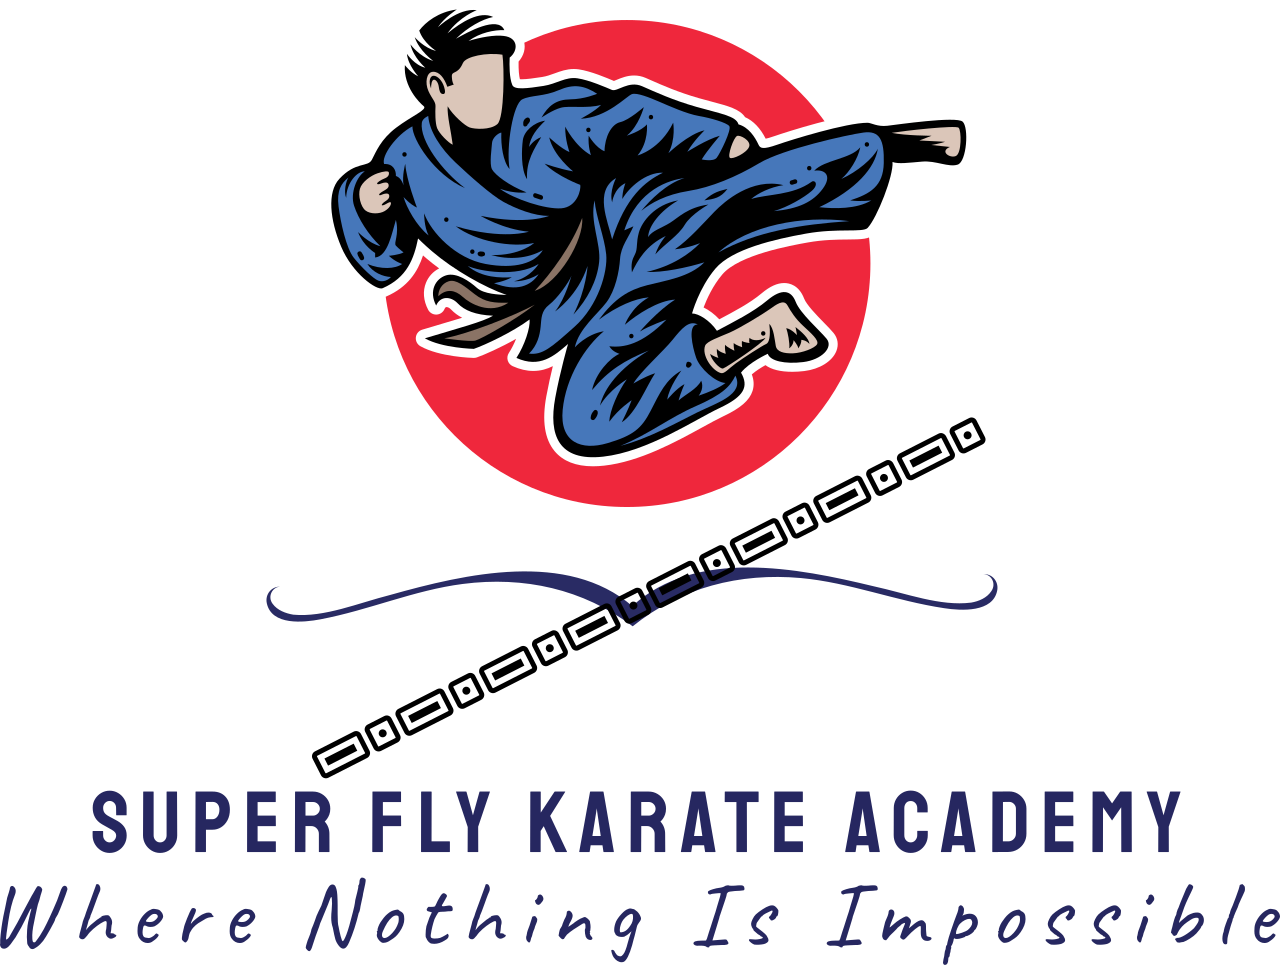 Super Fly Karate Academy 's logo